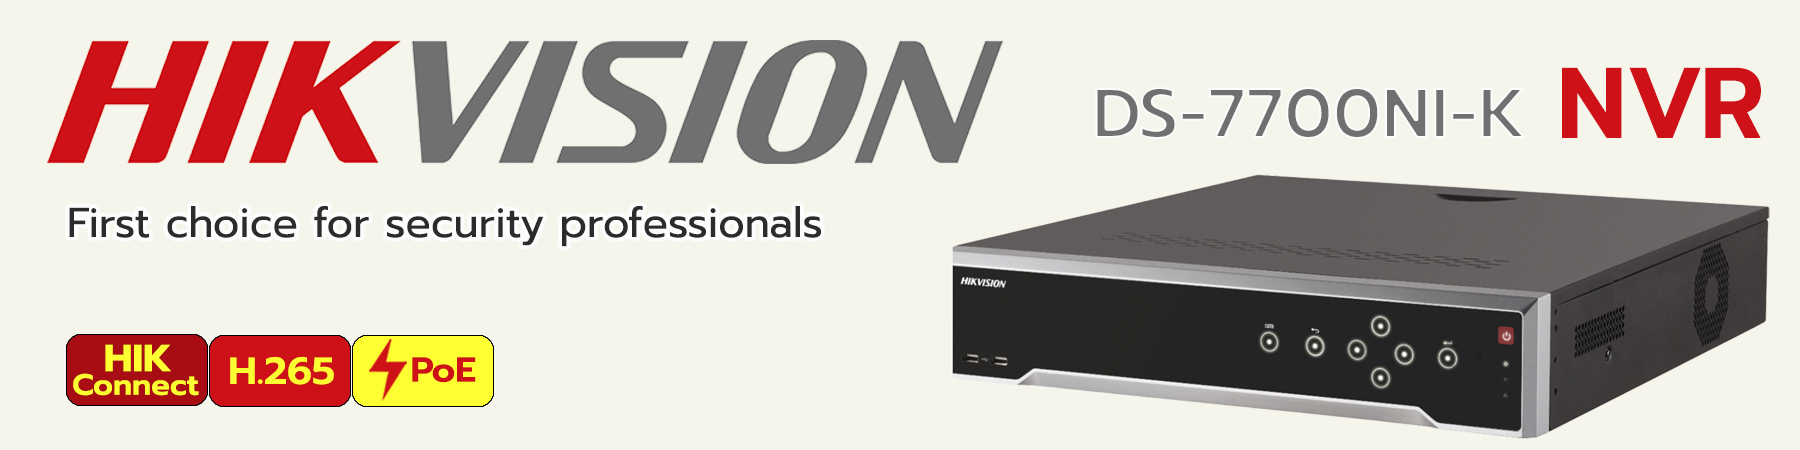 Hikvision NVR, Hikvision Network Video Recorder, DS-7716NI-K4, DS-7716NI-K4/16P, DS-7732NI-K4, DS-7732NI-K4/16P